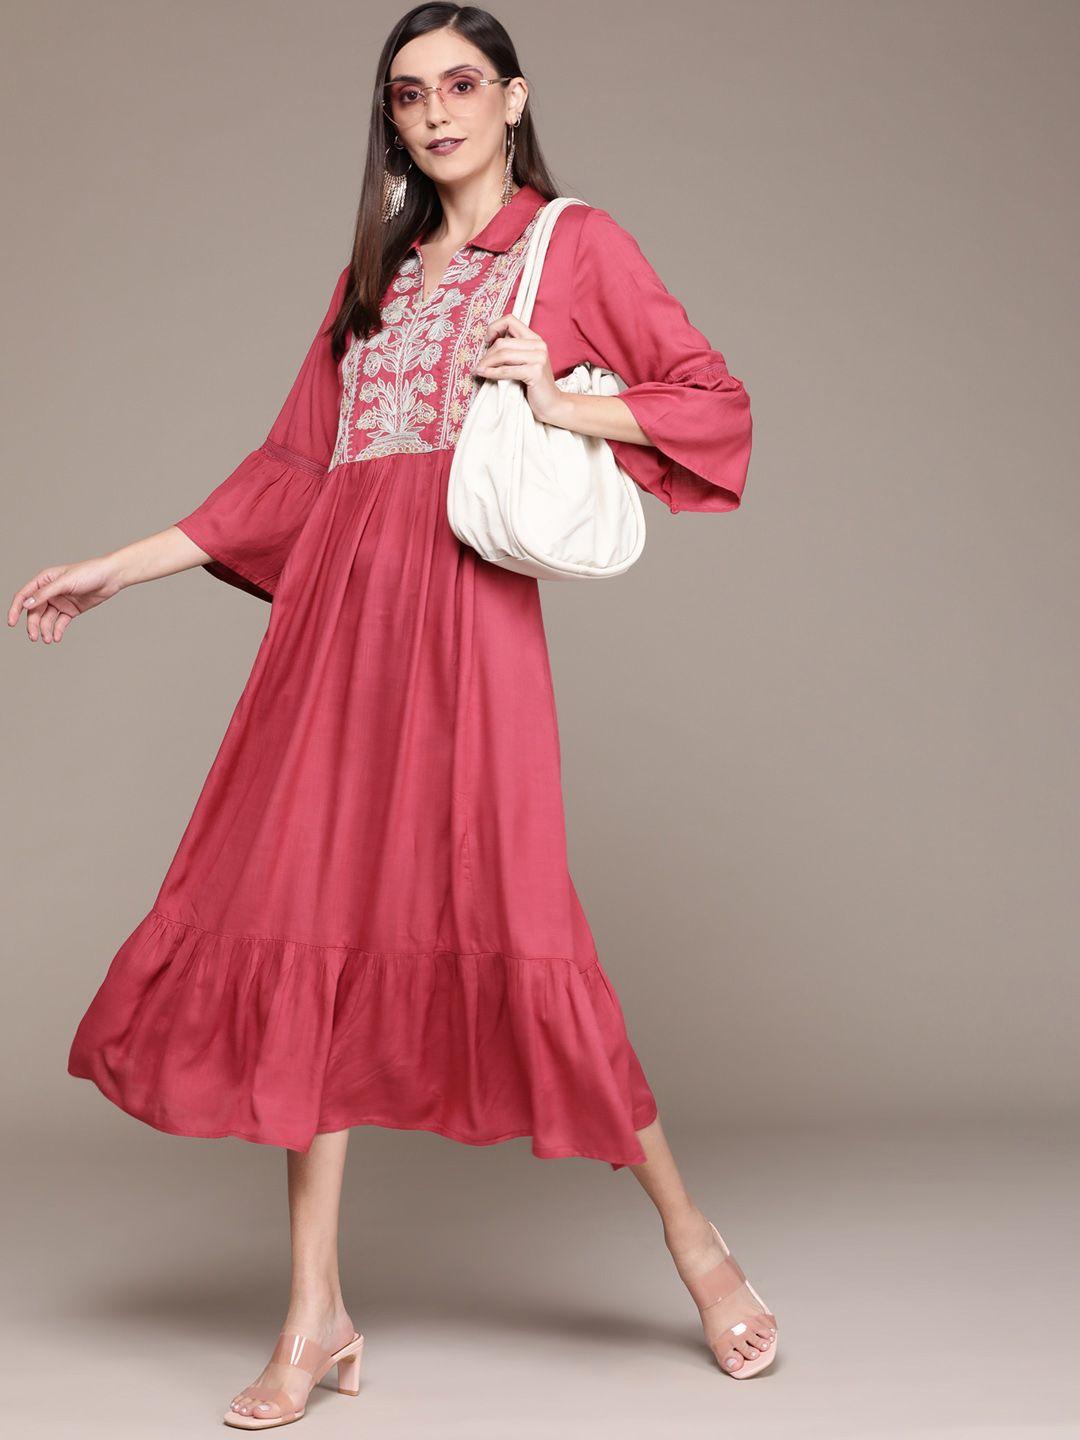 aarke ritu kumar women pink & white ethnic motifs embroidered shirt midi dress